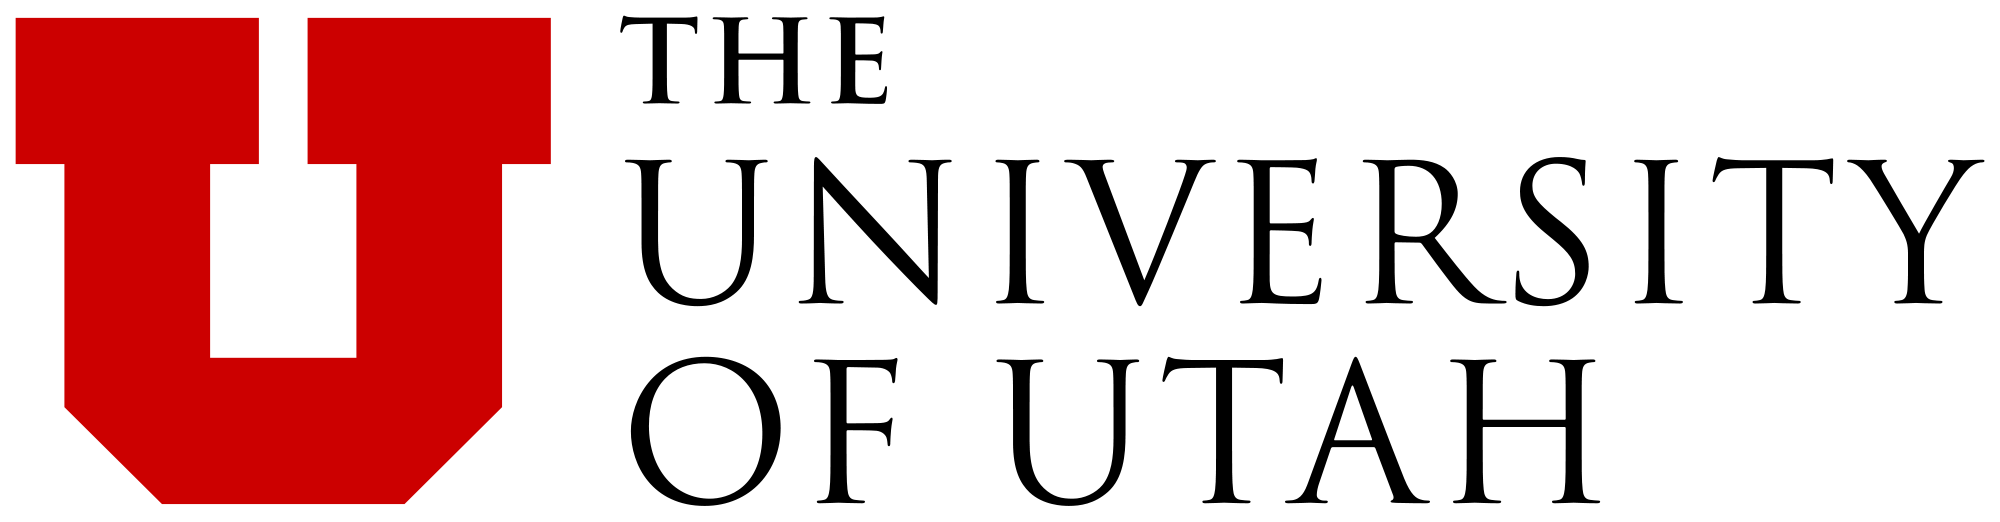 2000px-University_of_Utah_horizontal_logo.svg